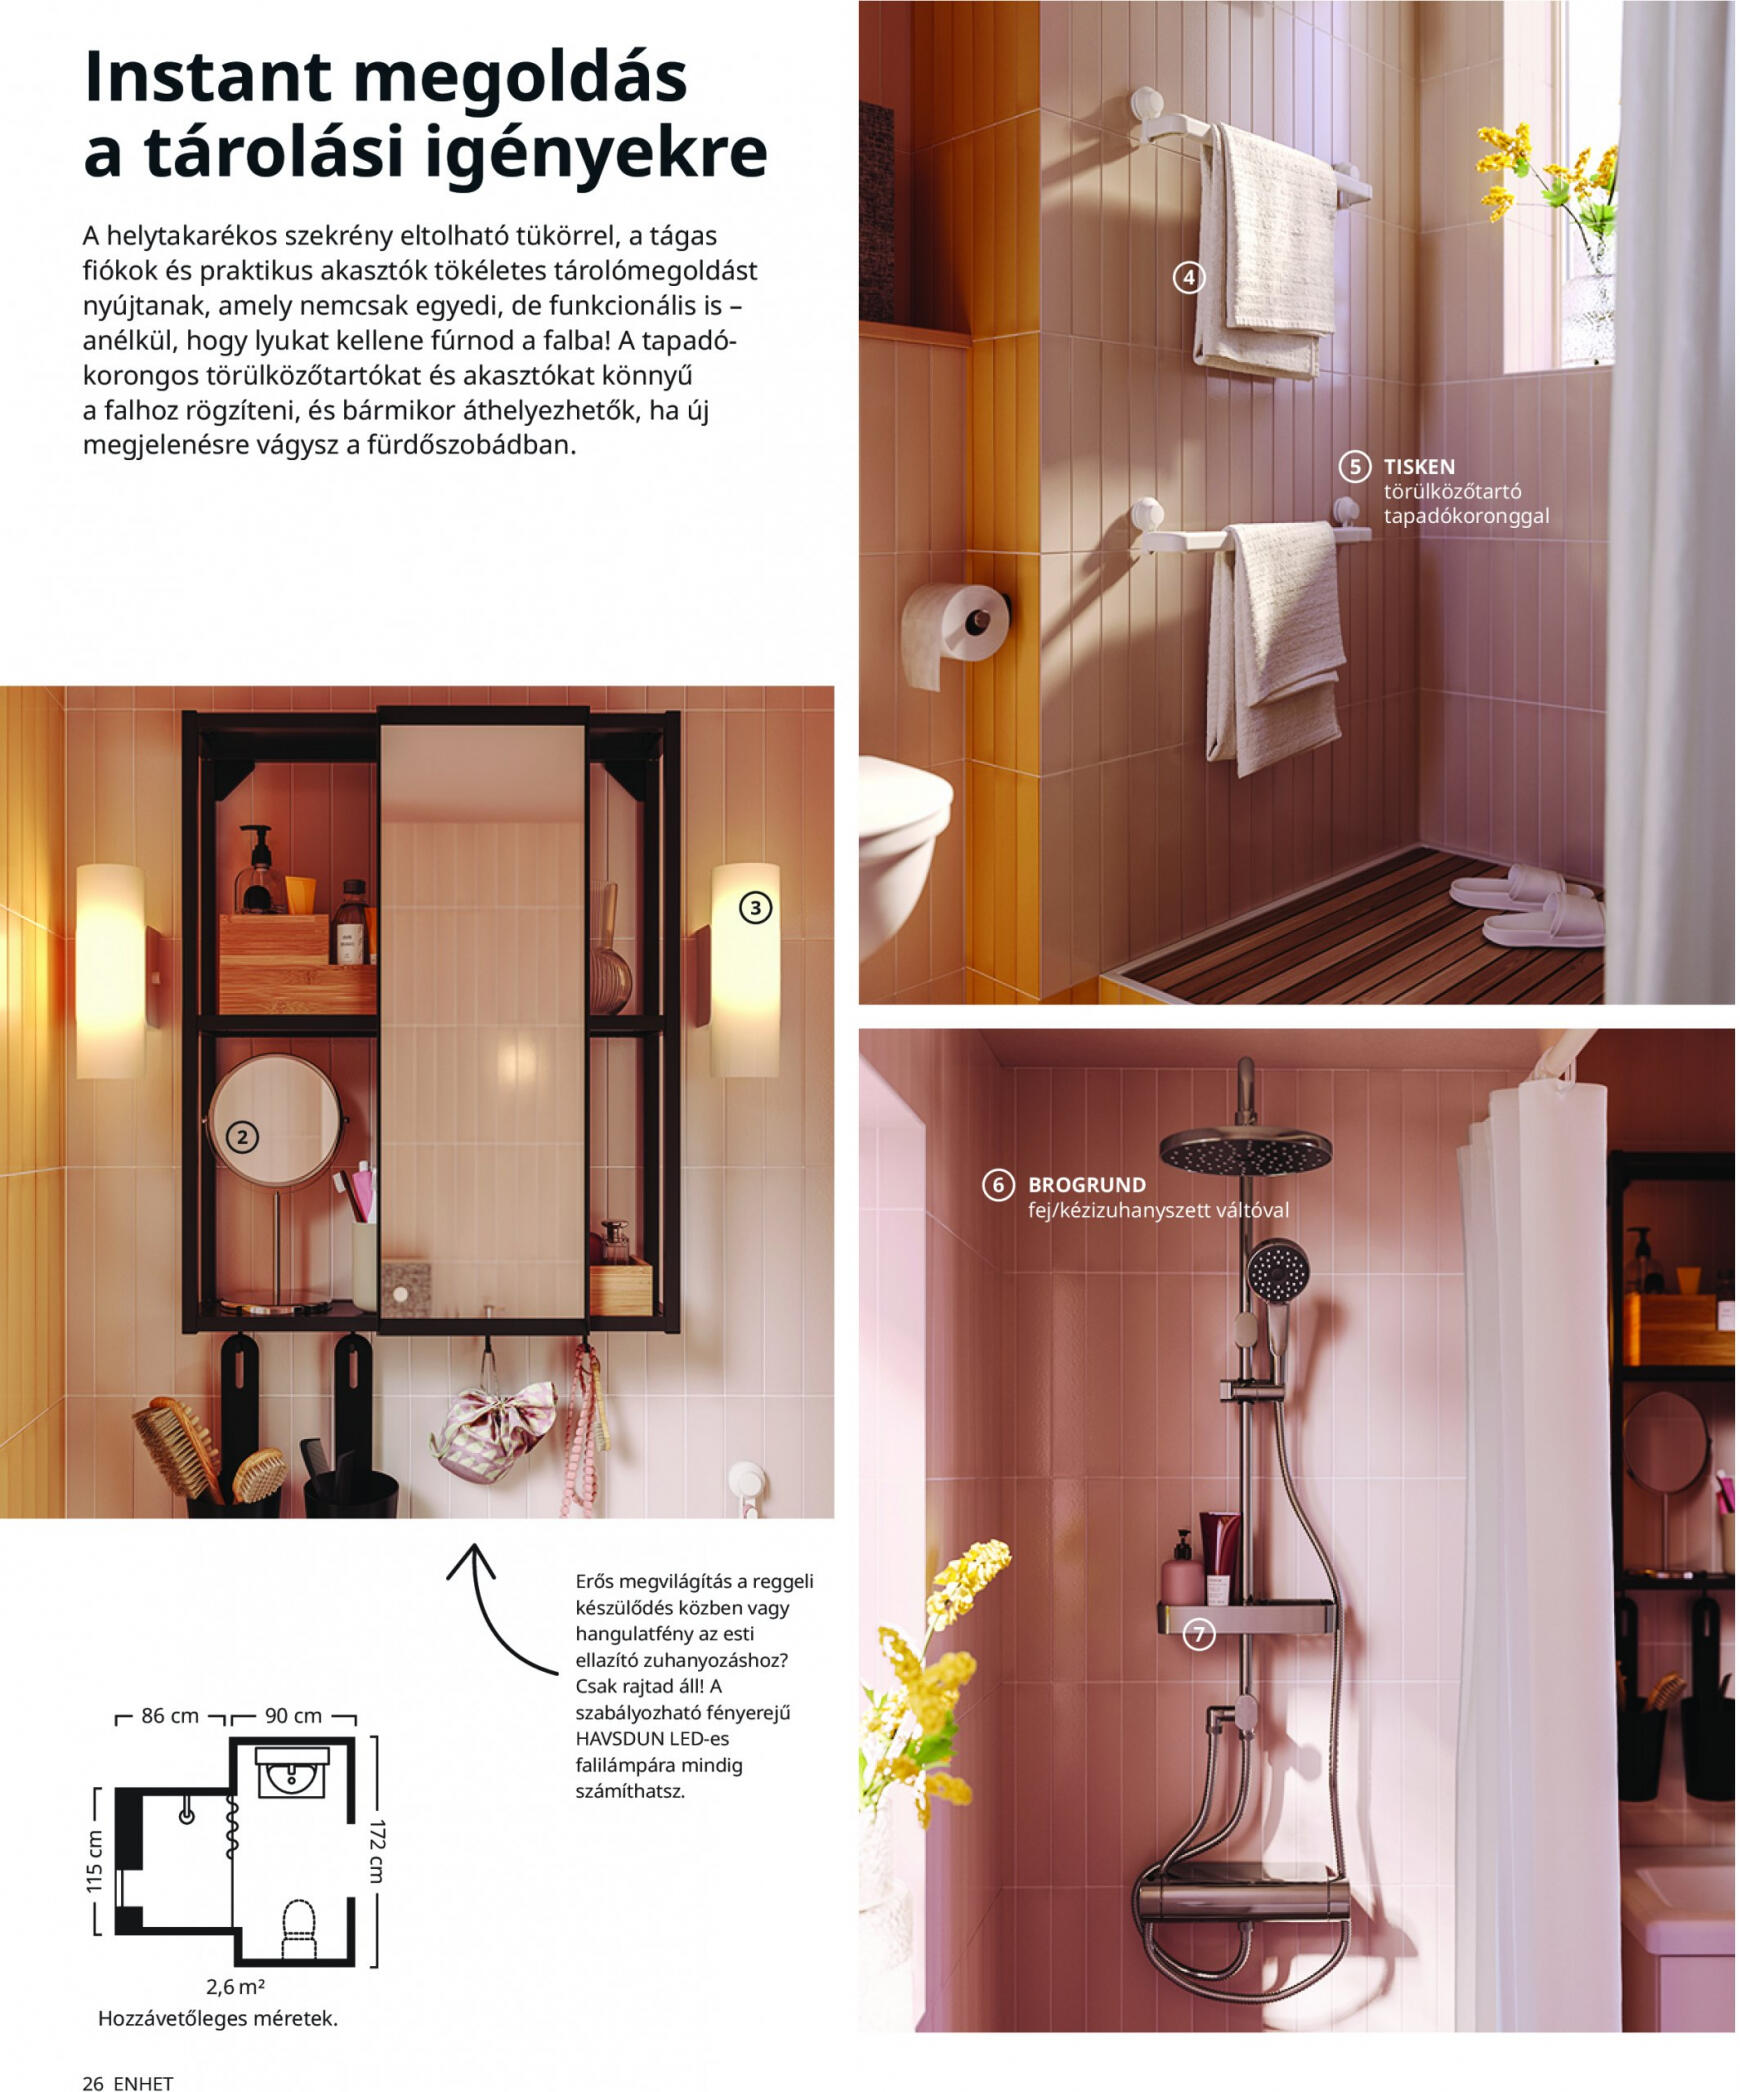 ikea - IKEA újság hétfőtől 09.26. - page: 26